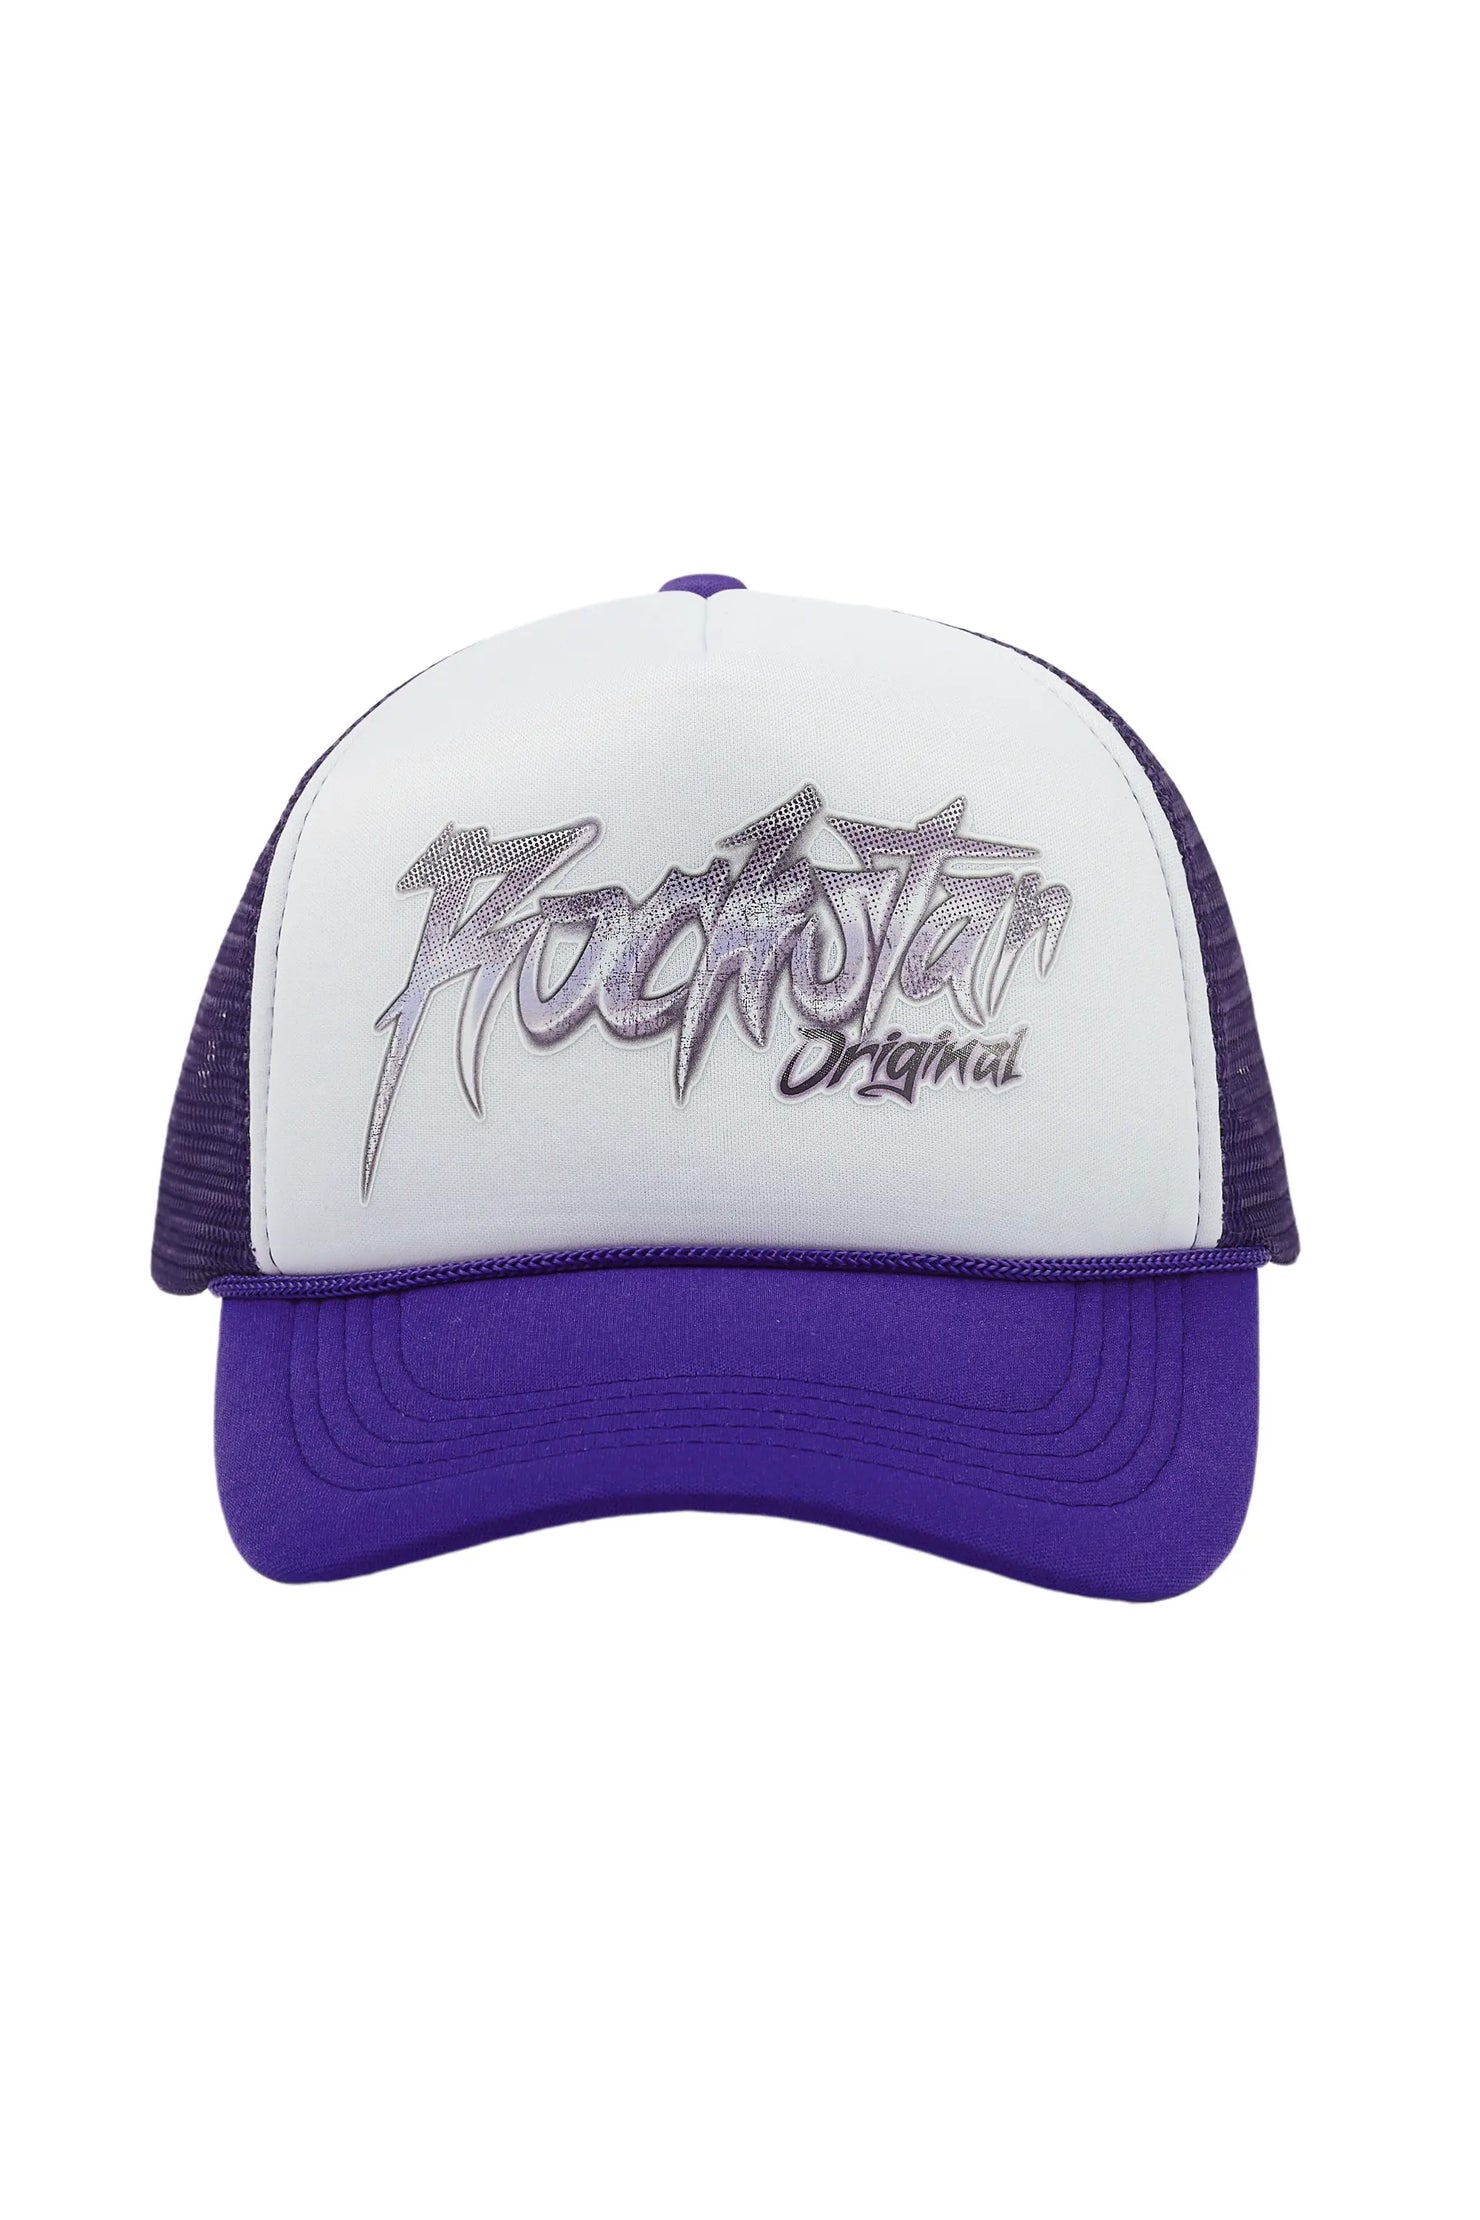 Mikelo White/Purple Trucker Hat